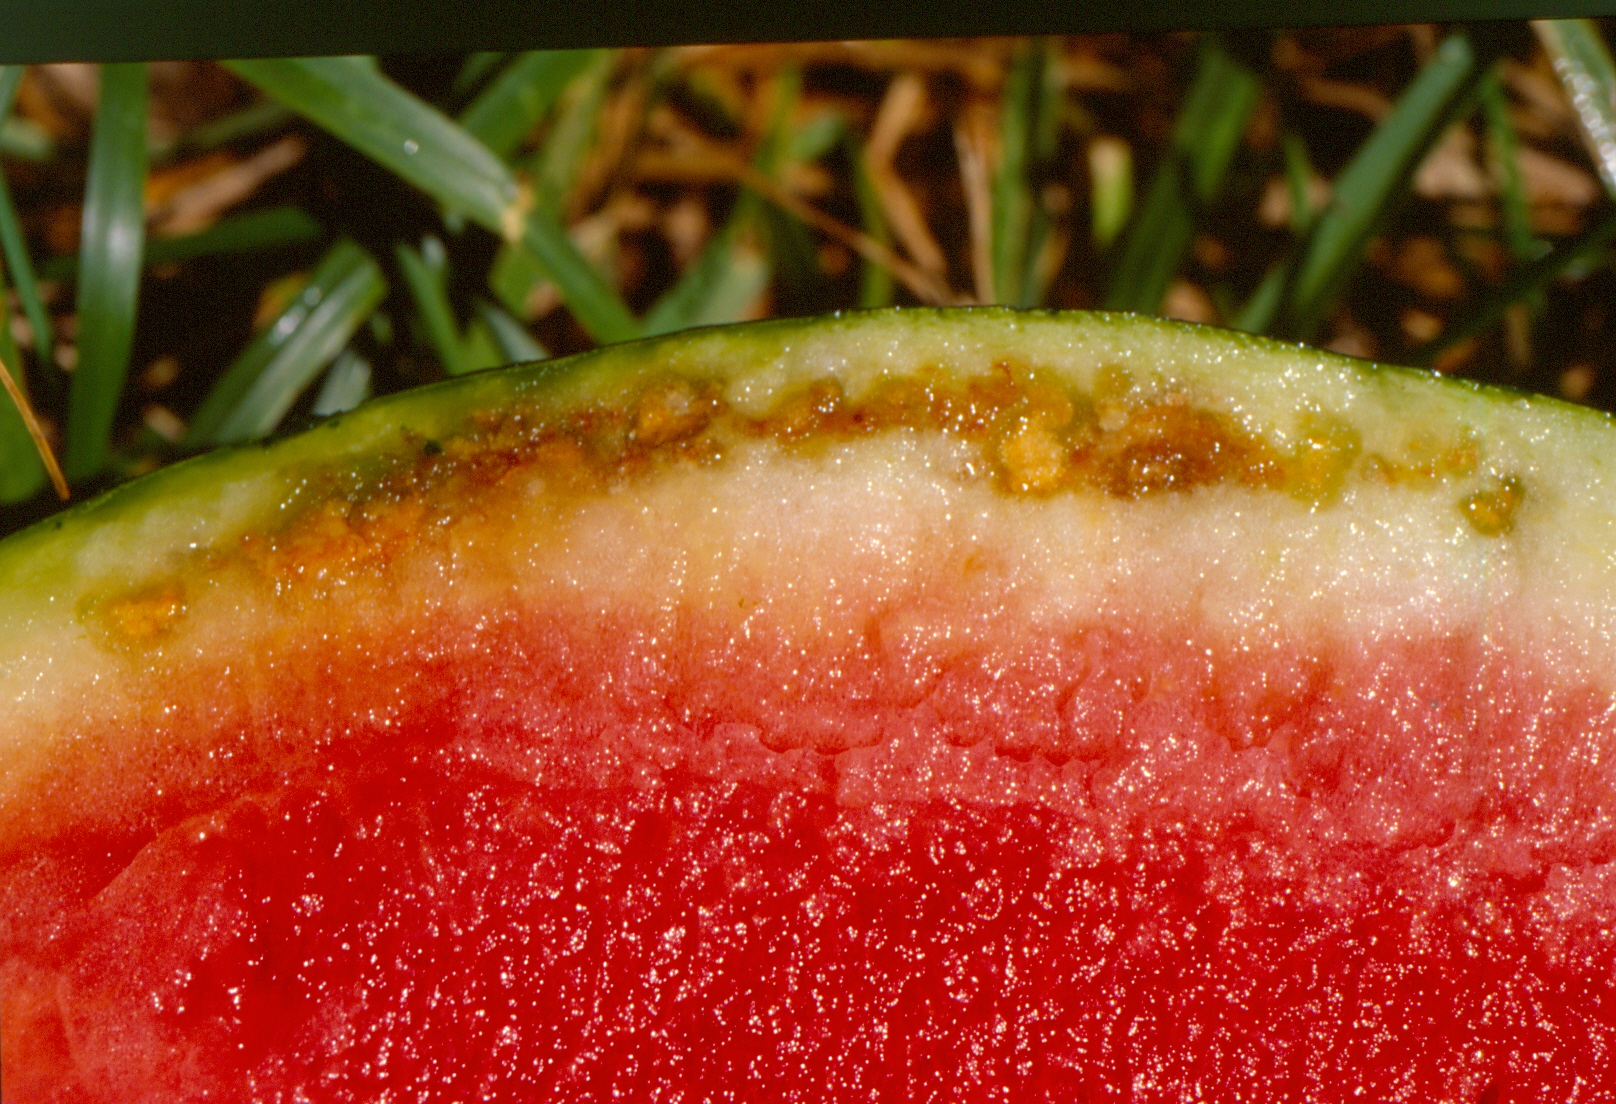 Figure 1. Rind necrosis of watermelon